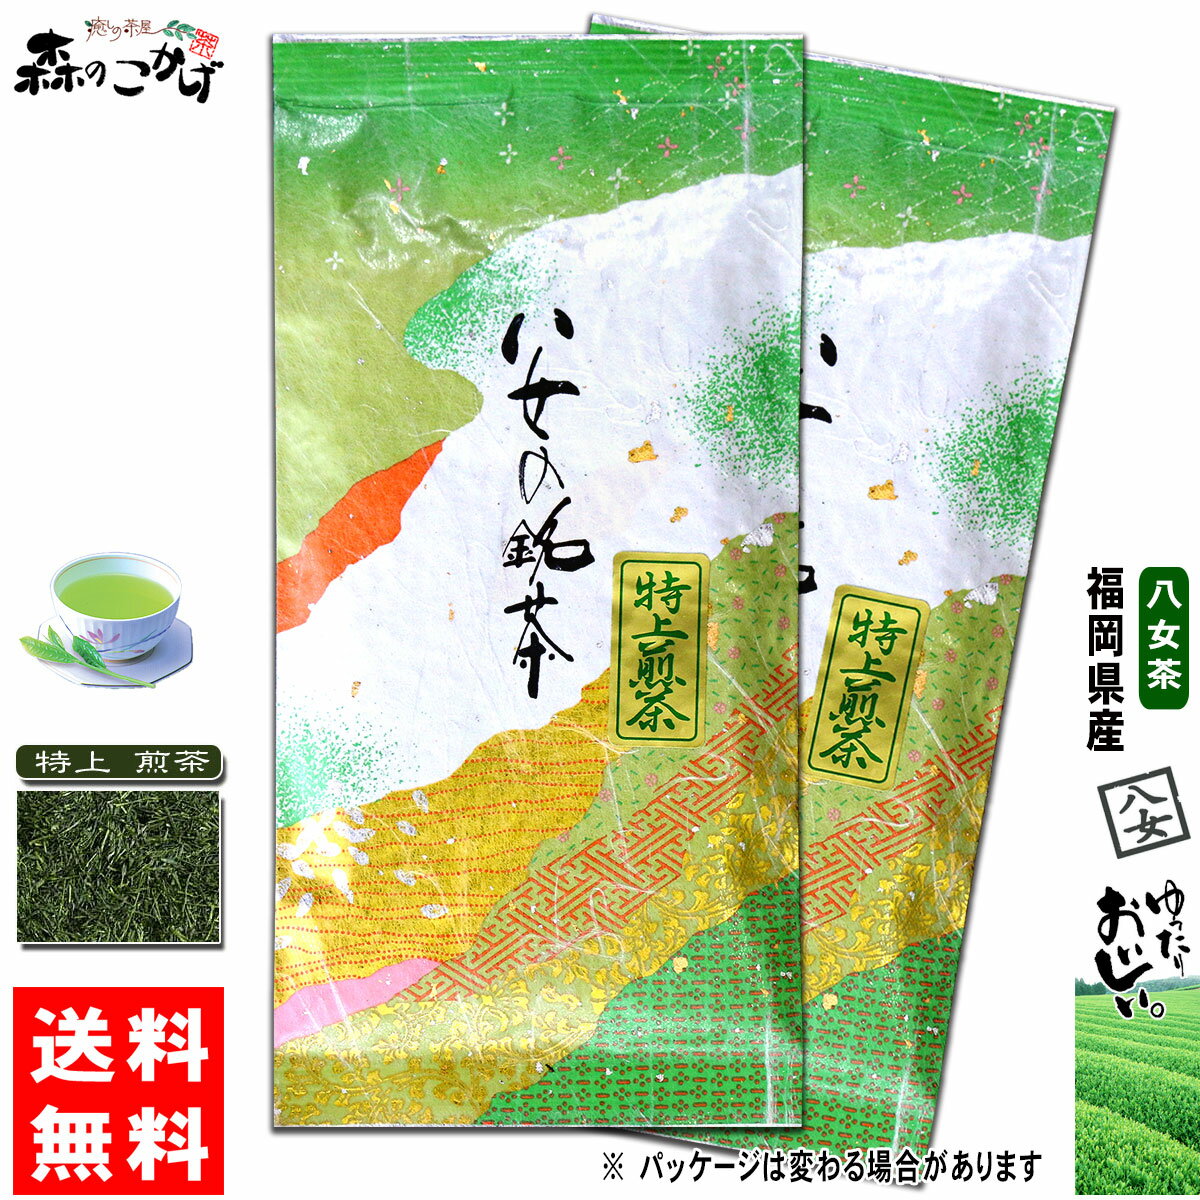 Y1【送料無料】 特上 煎茶 (100g×2個セット) 福岡